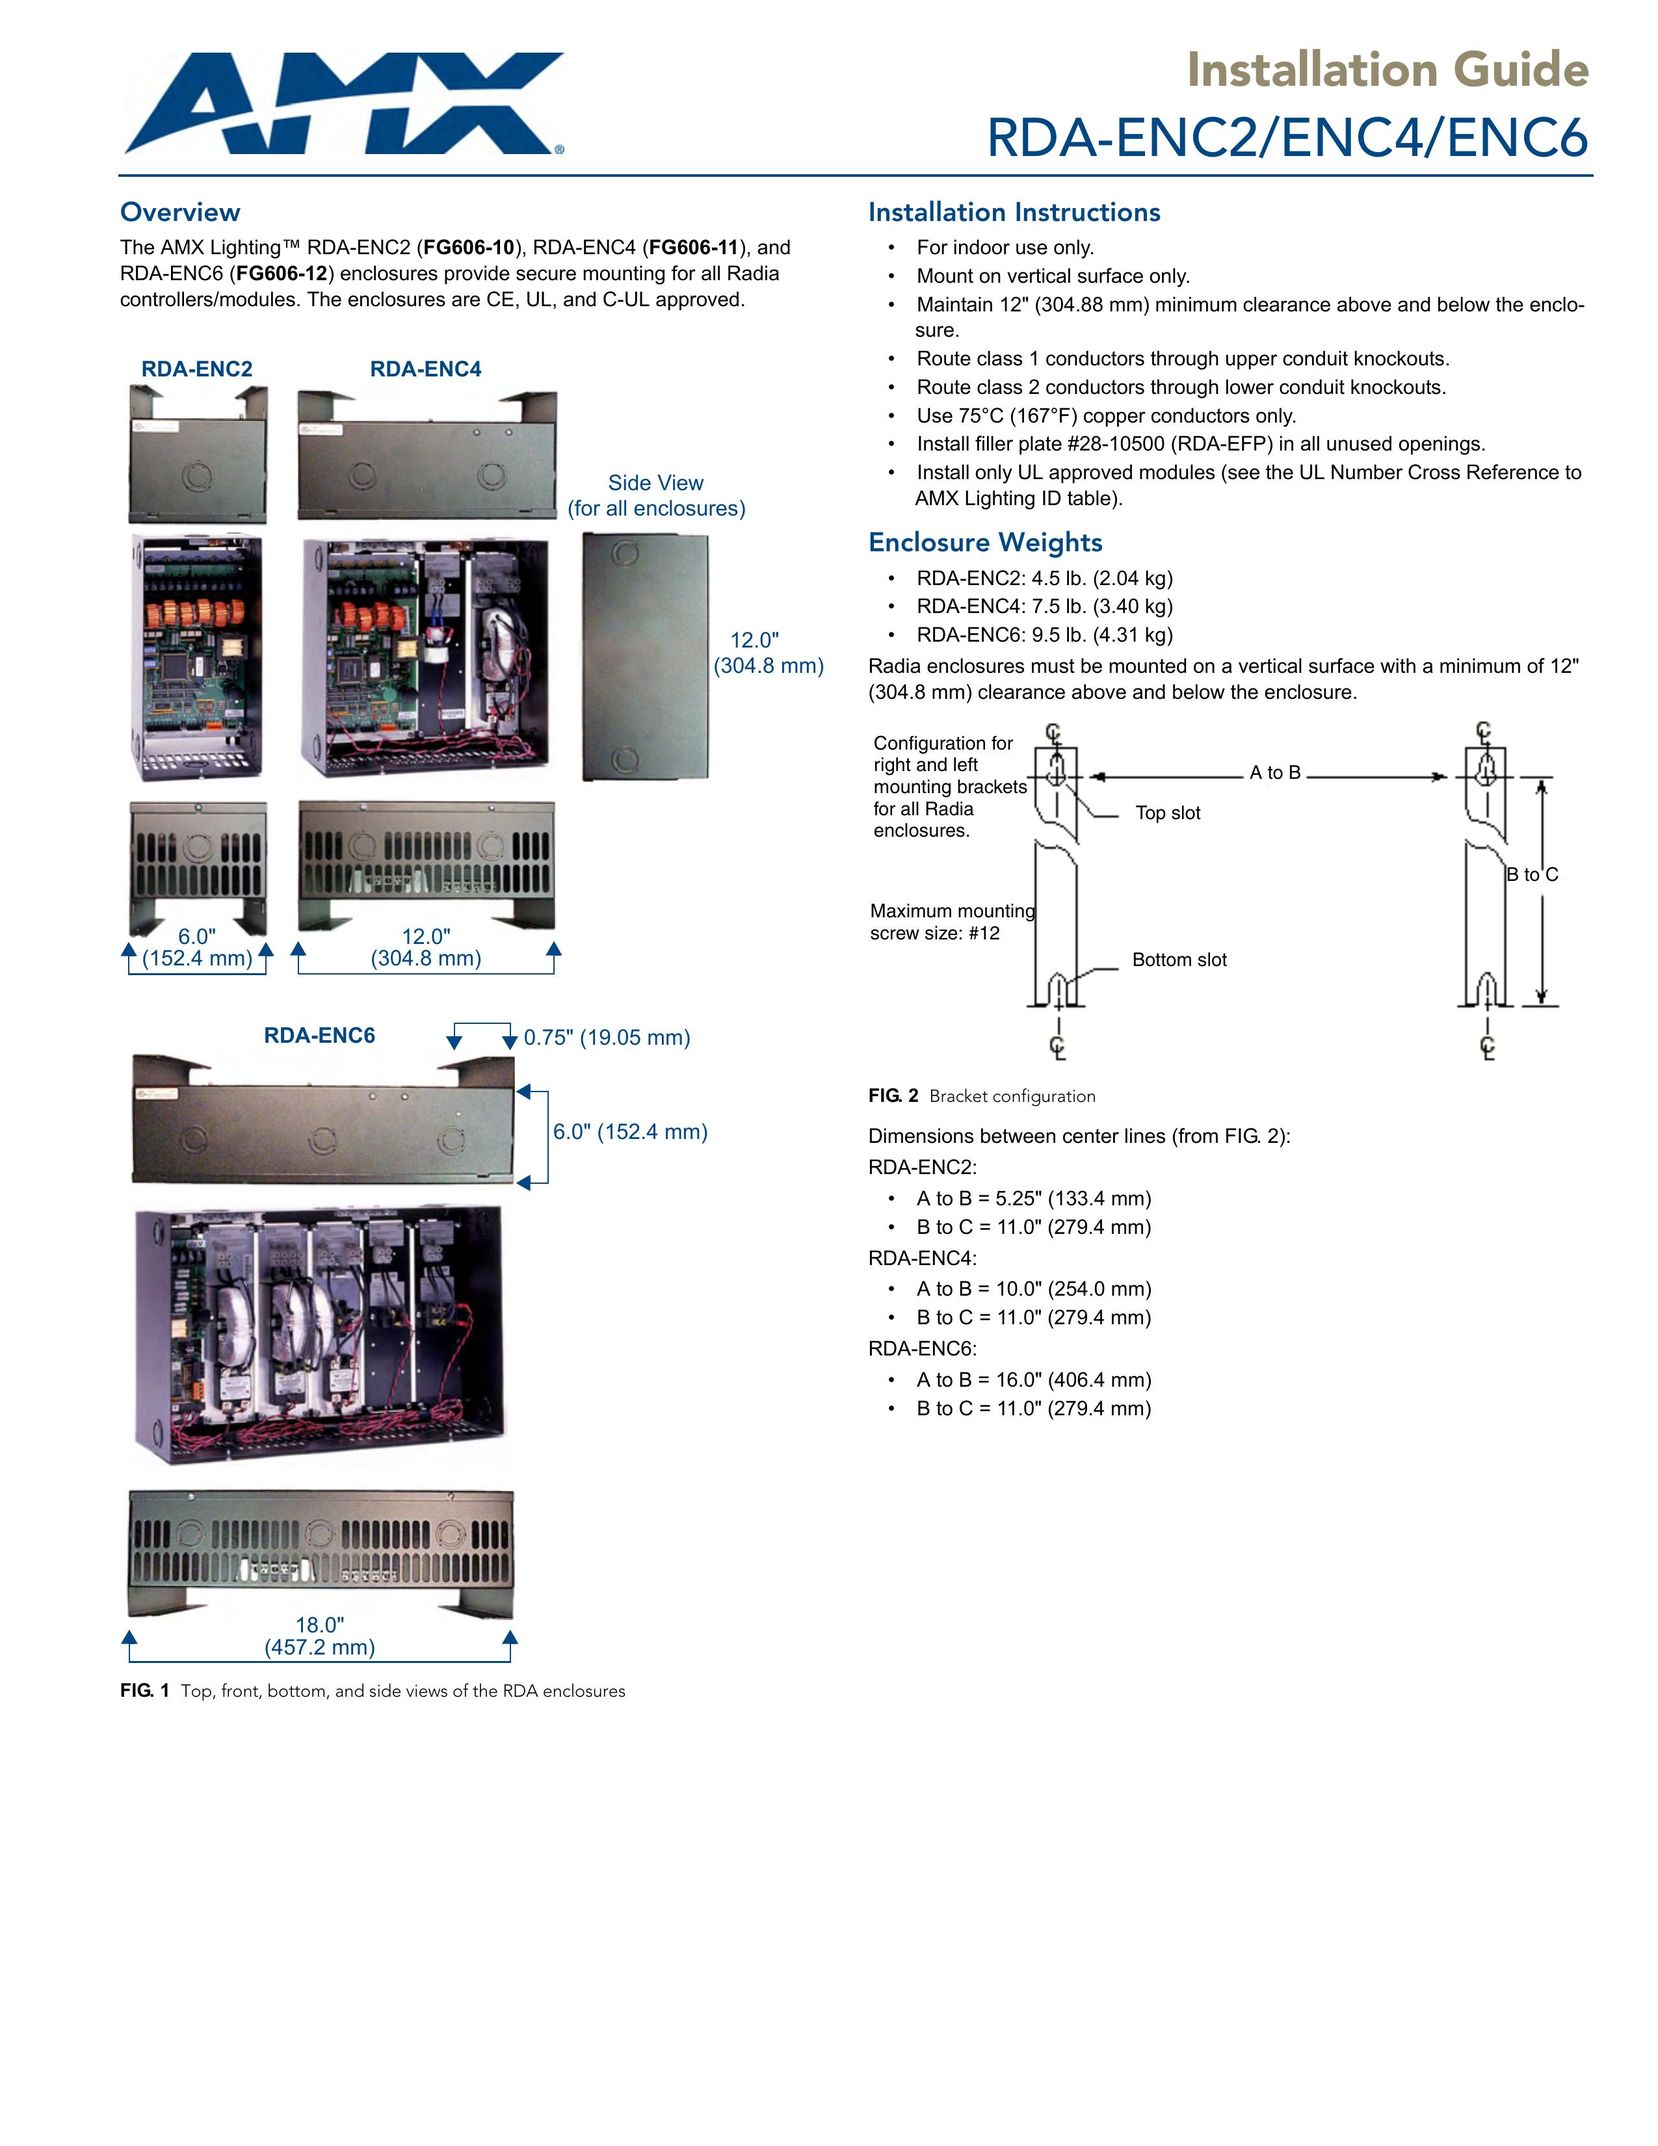 AMX ENC6 Indoor Furnishings User Manual